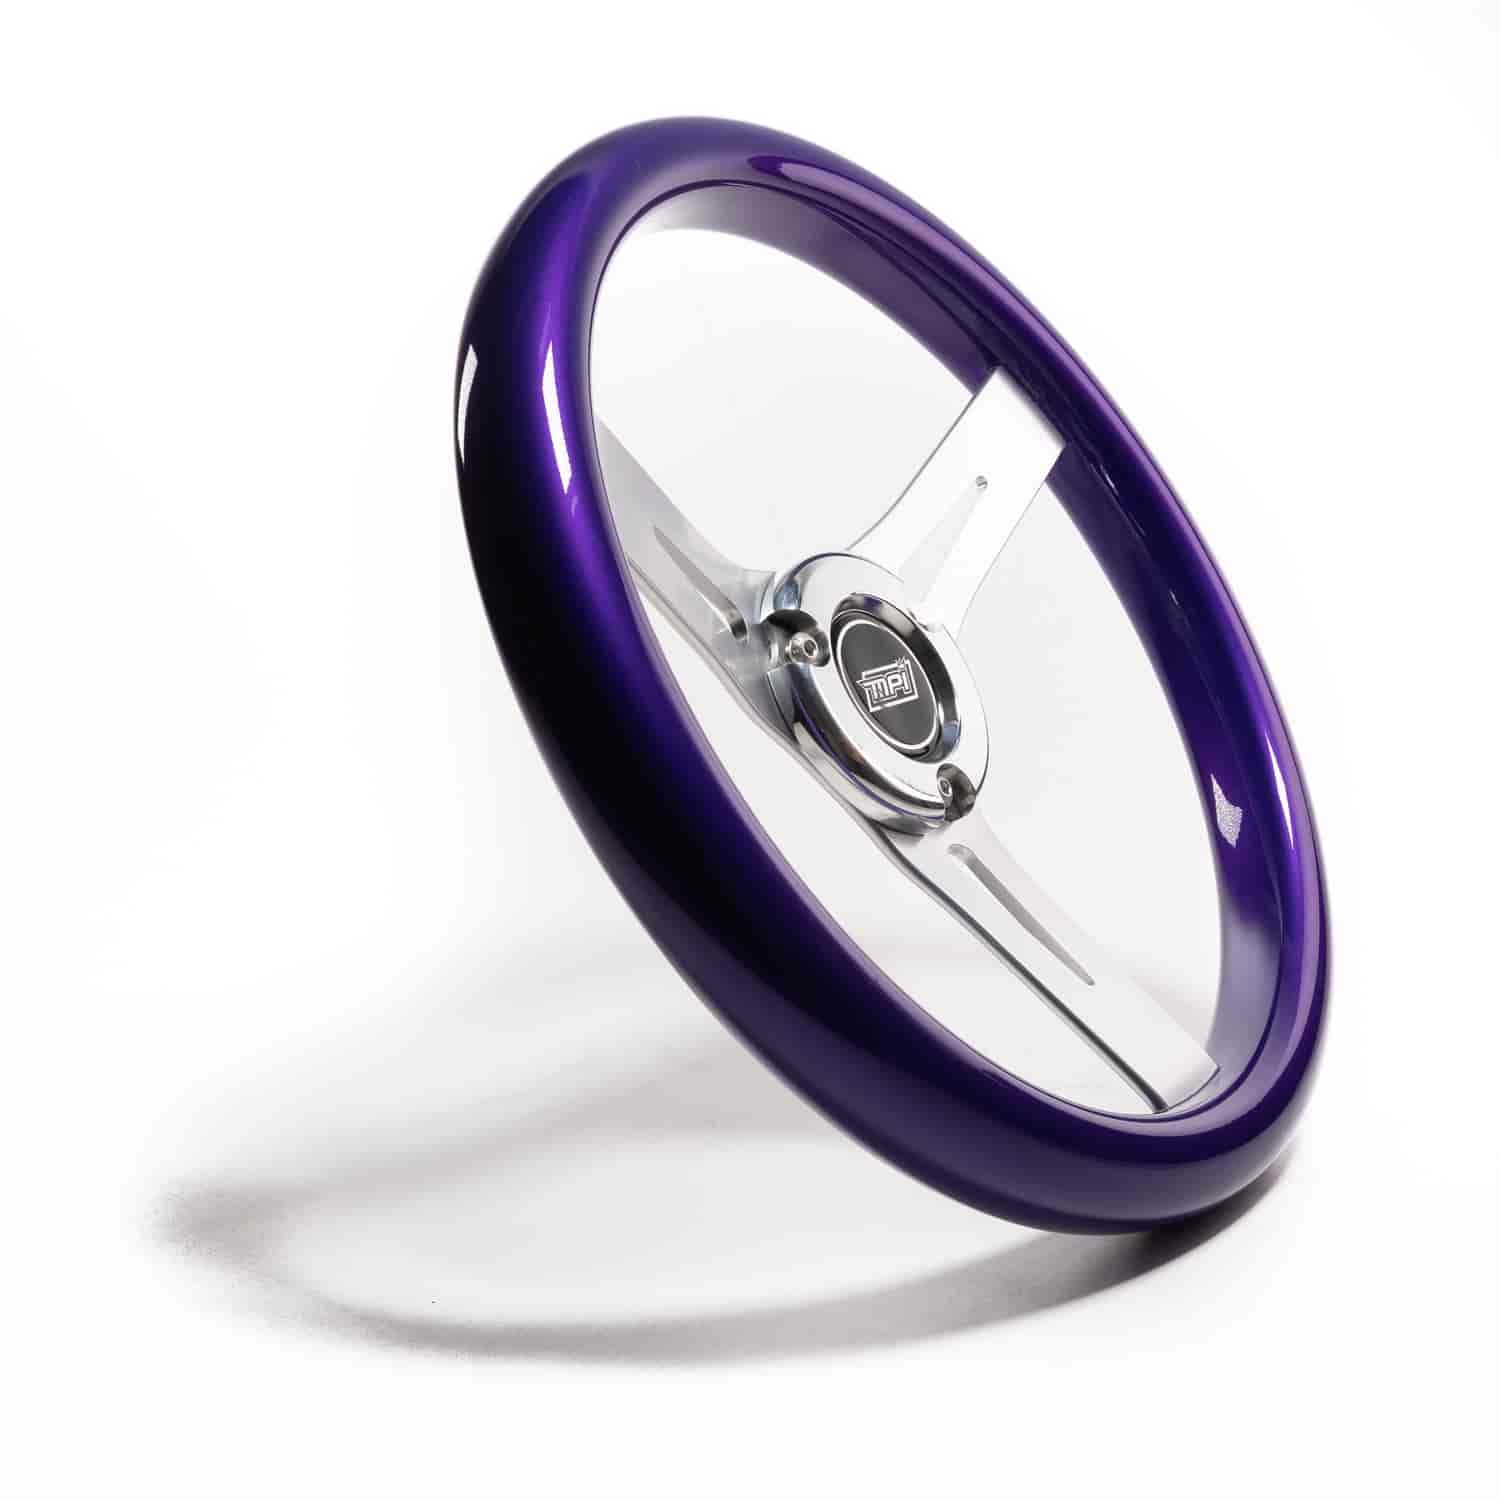 Corsa Boat/Golf Cart Steering Wheel [Purple]